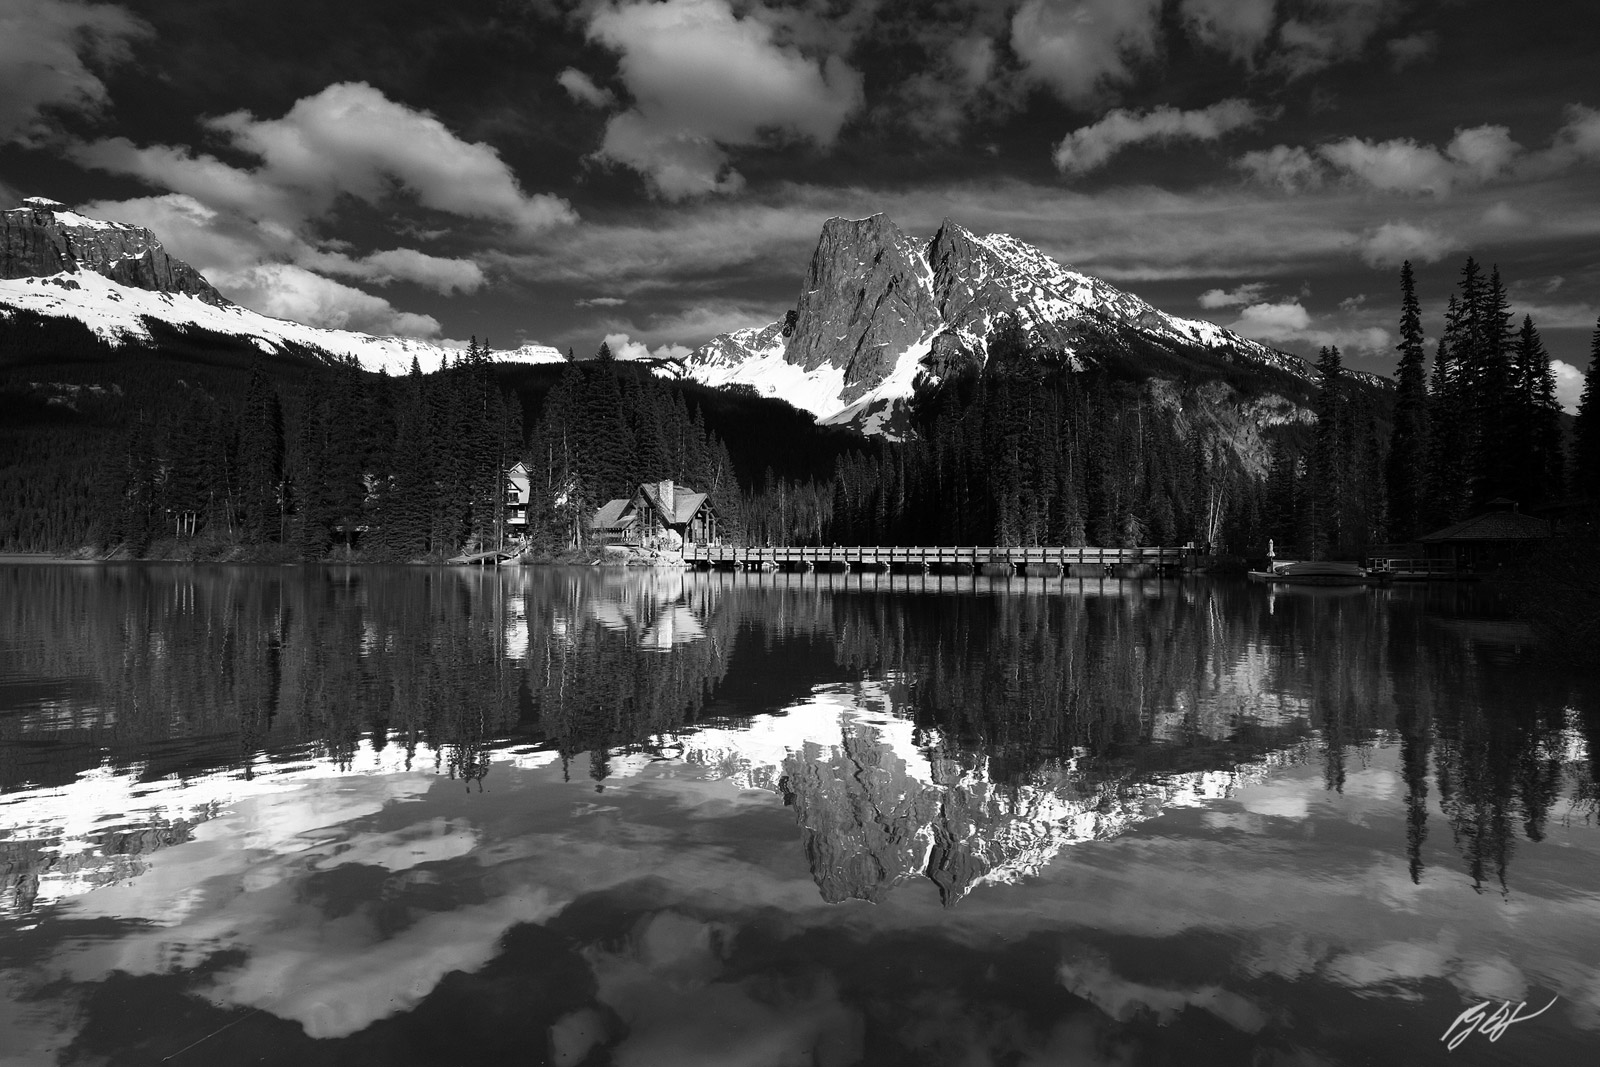 Wapta Peak and Emerald Lake Lodge Reflected in Emerald Lake in Yoho National Park in British Columbia Canada